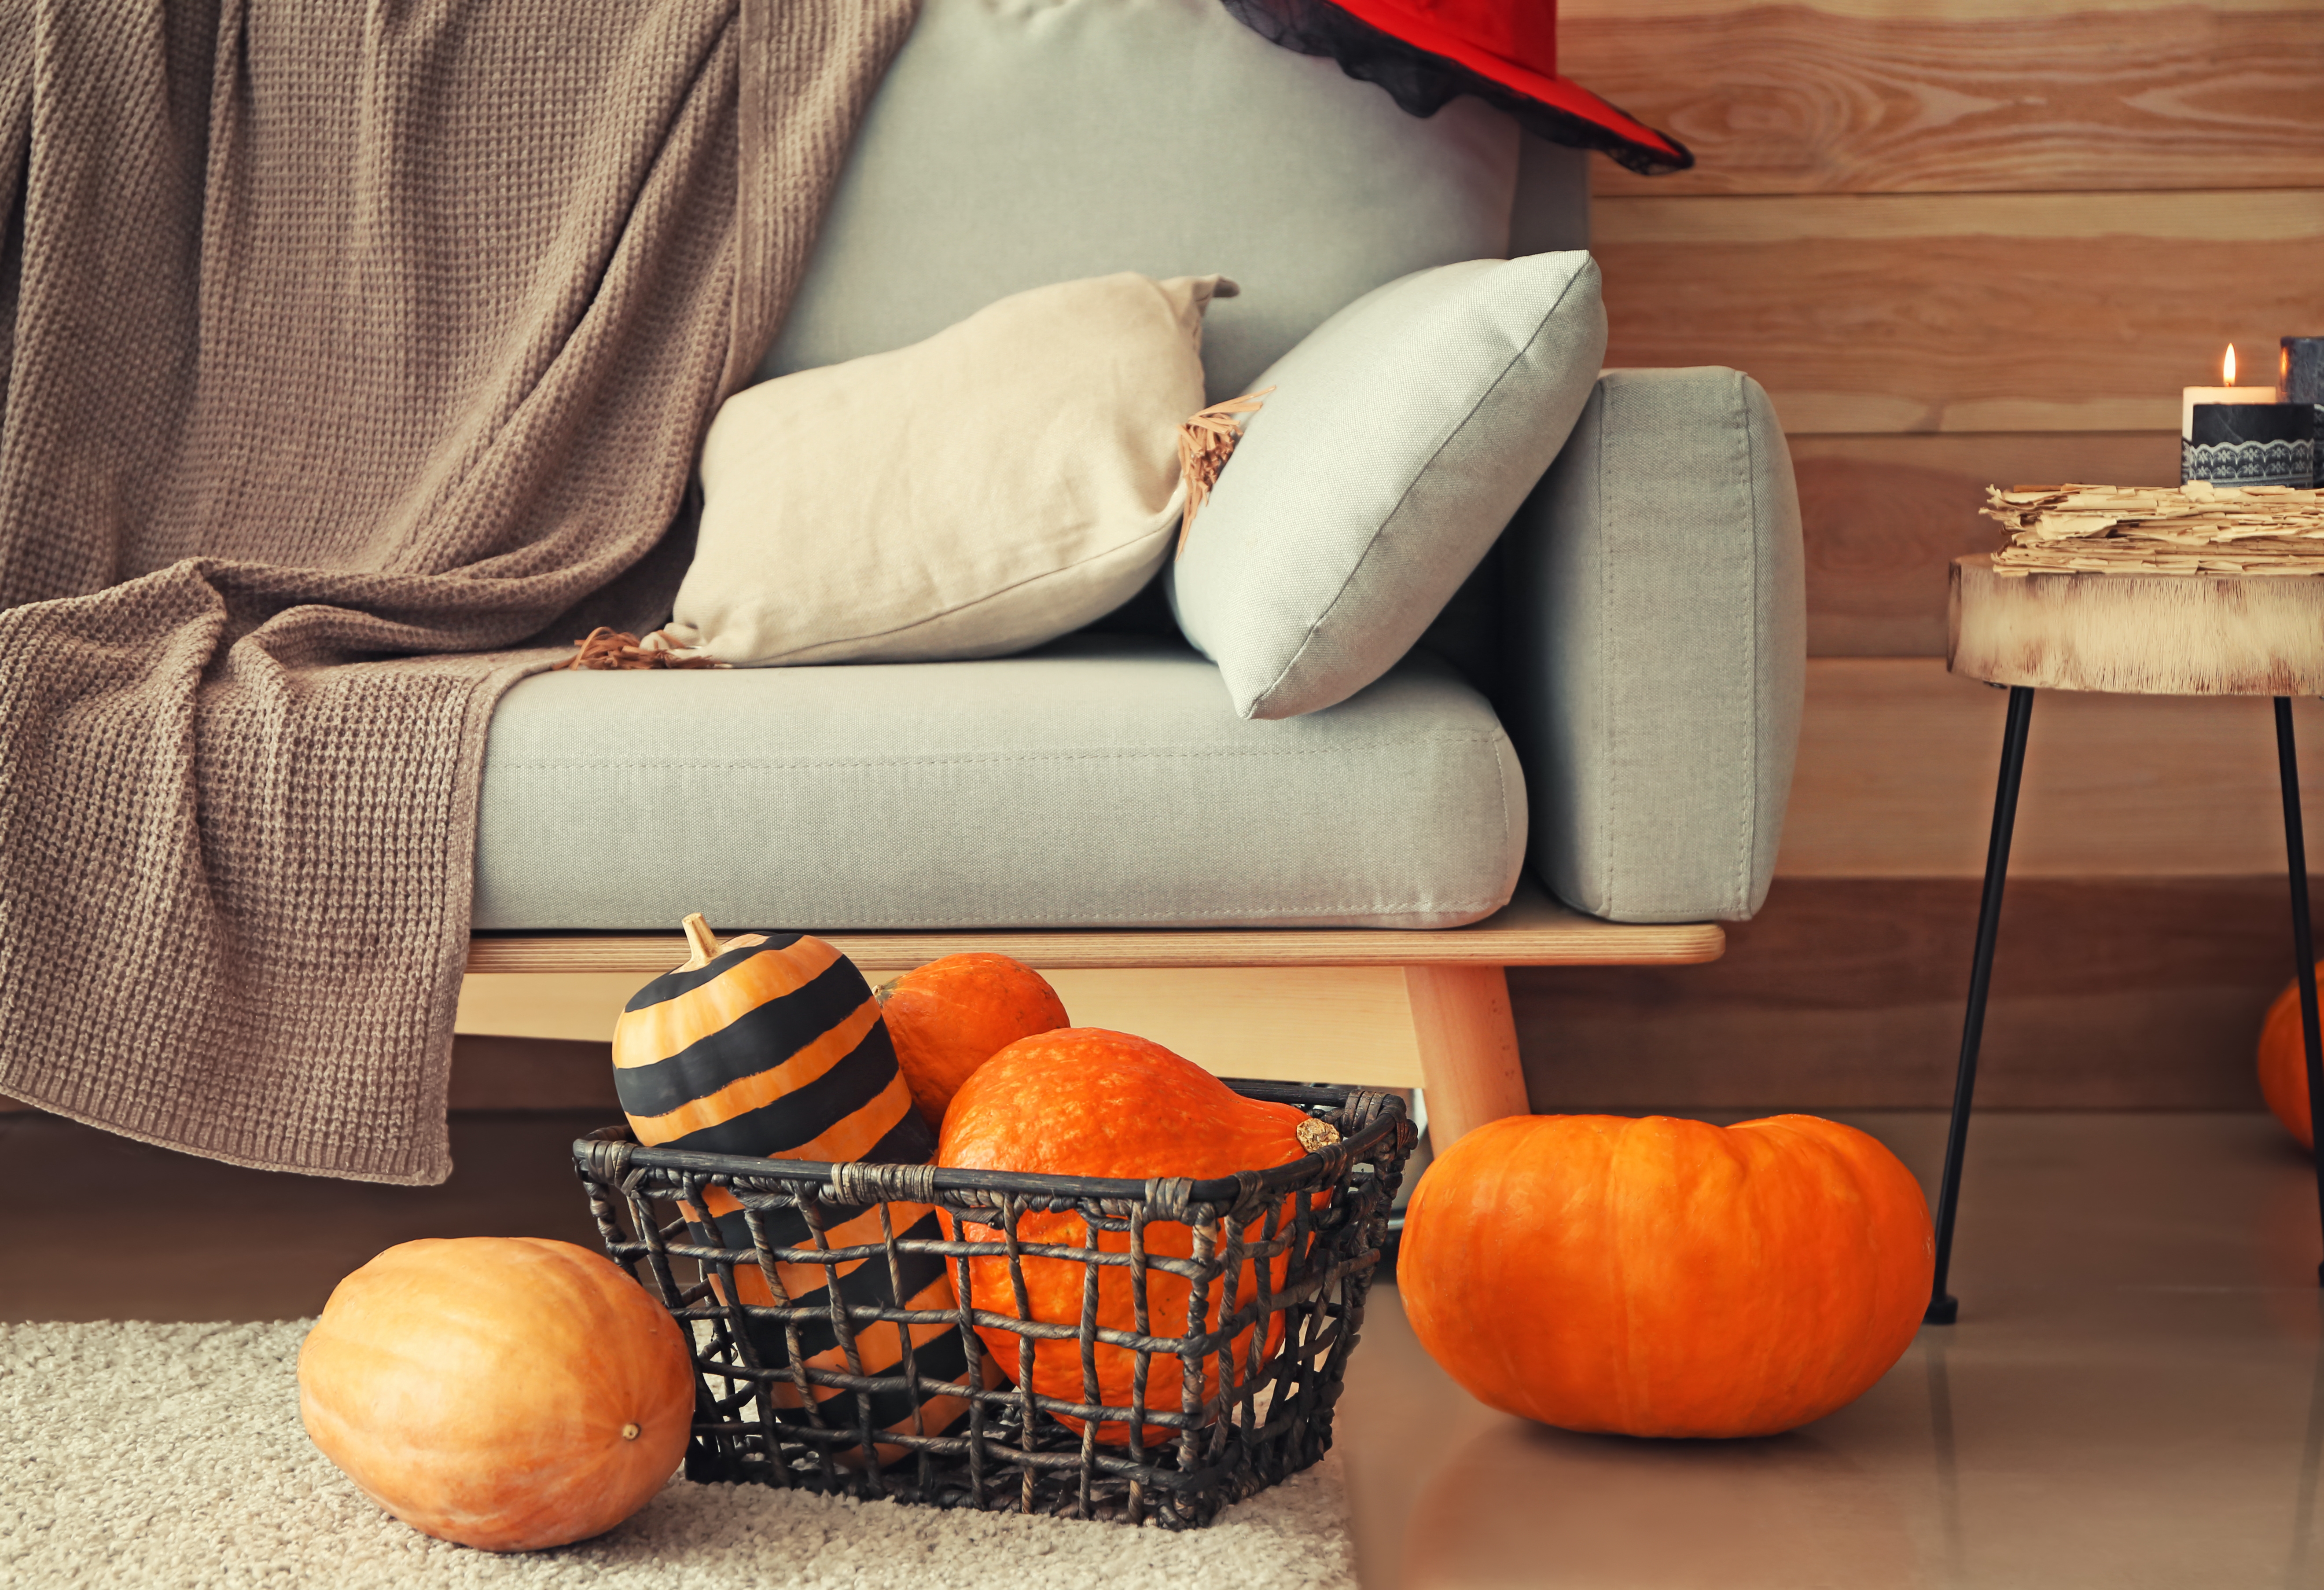 Basket with pumpkins prepared for Halloween party on floor in room